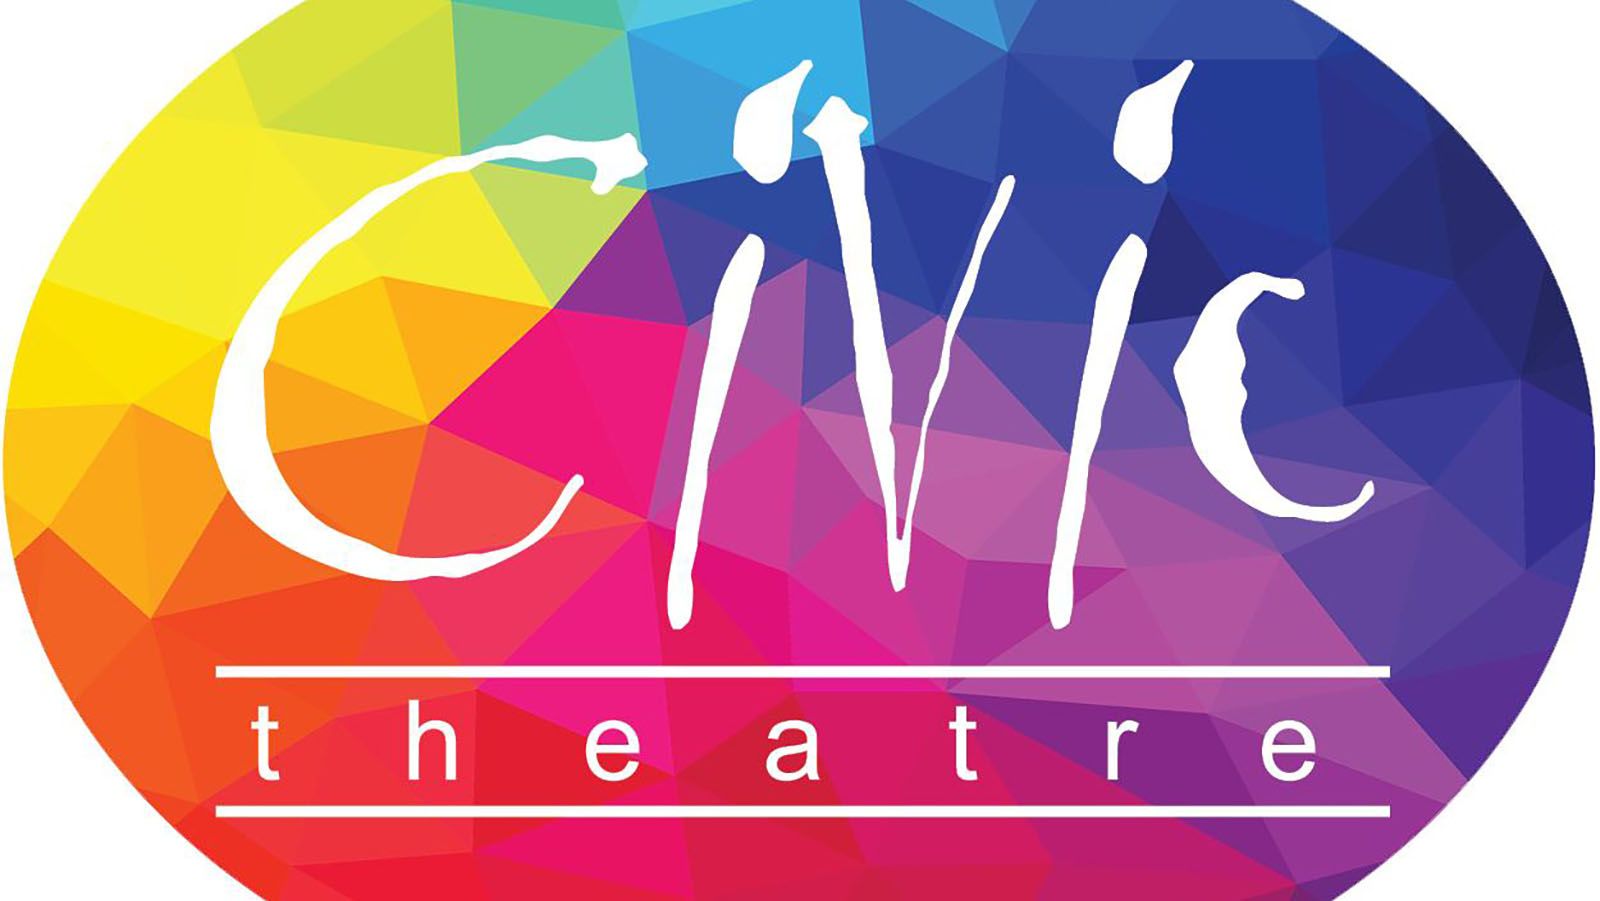 Fort Wayne Civic Theatre will reveal its 2023-24 season on Feb. 4.